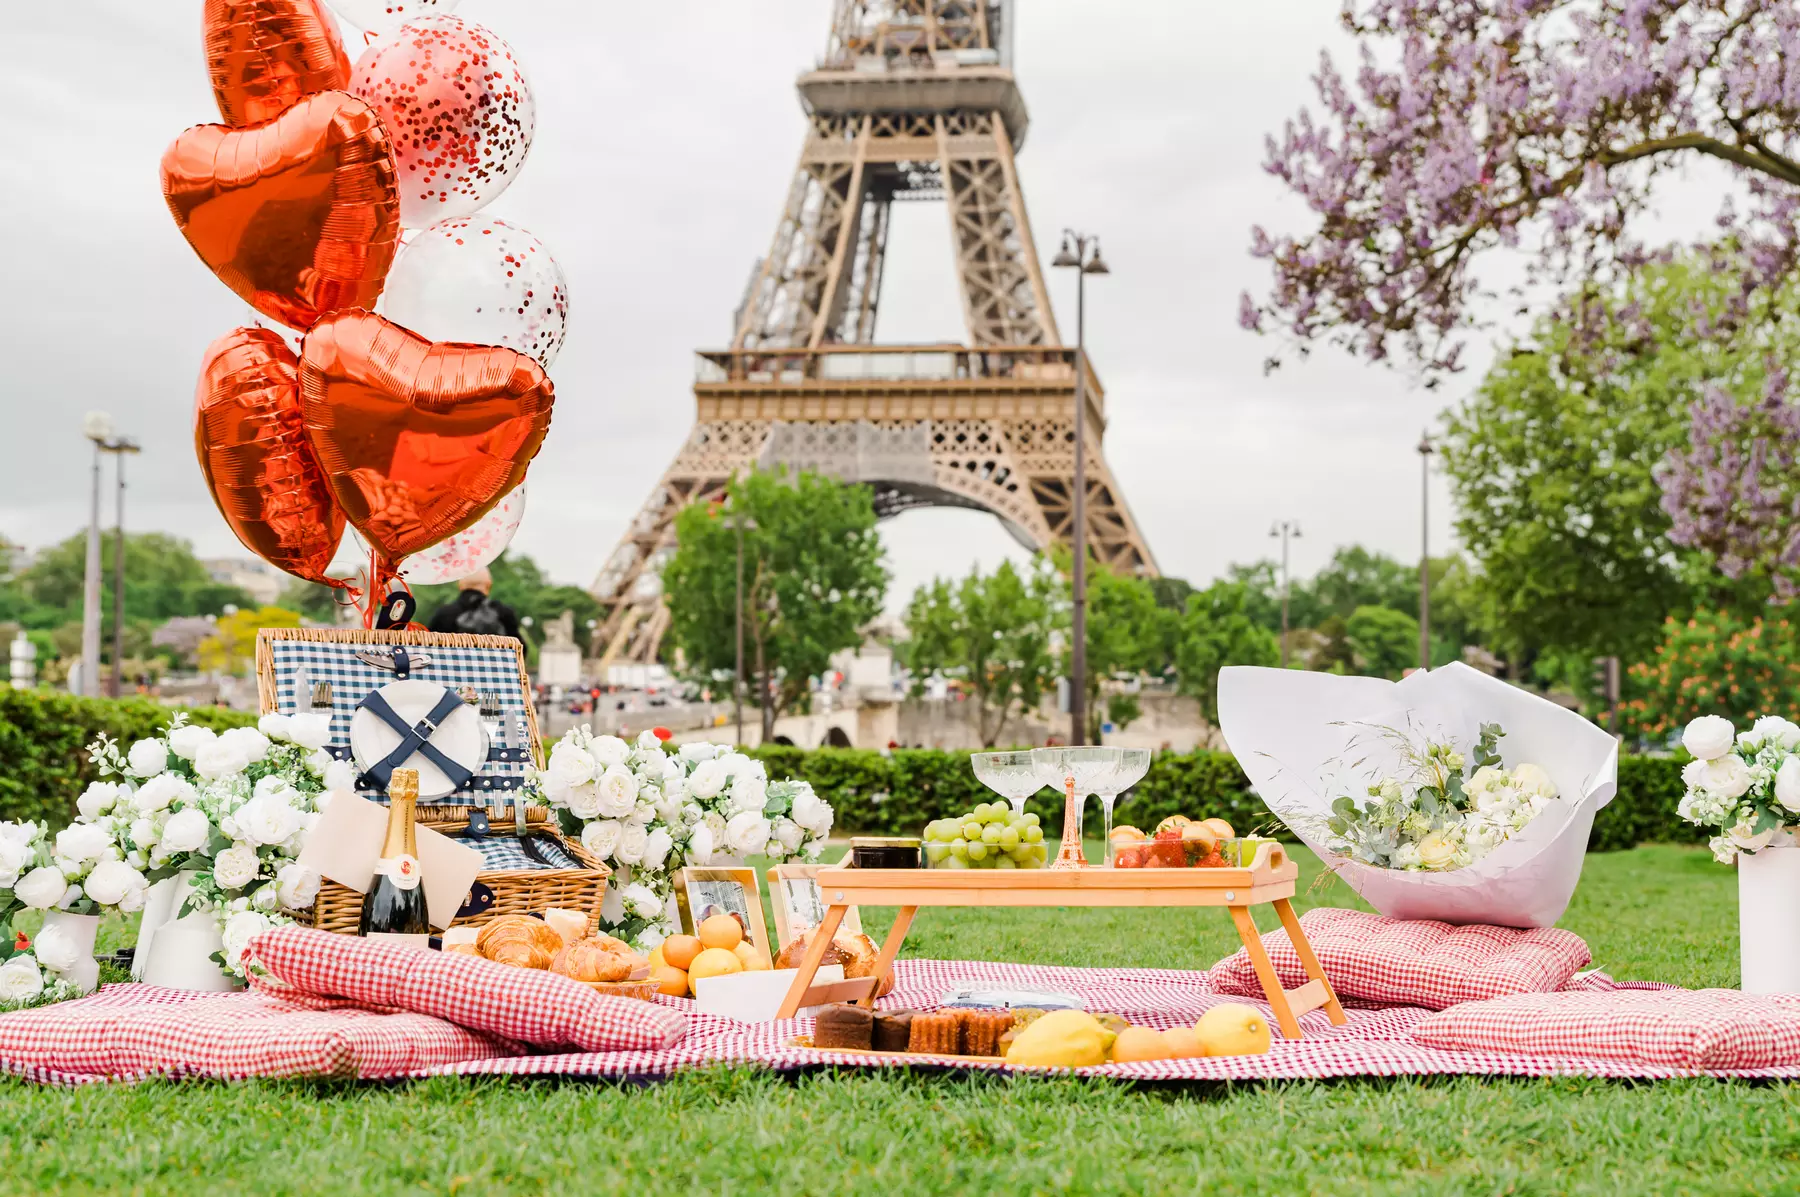 picnic proposal in paris